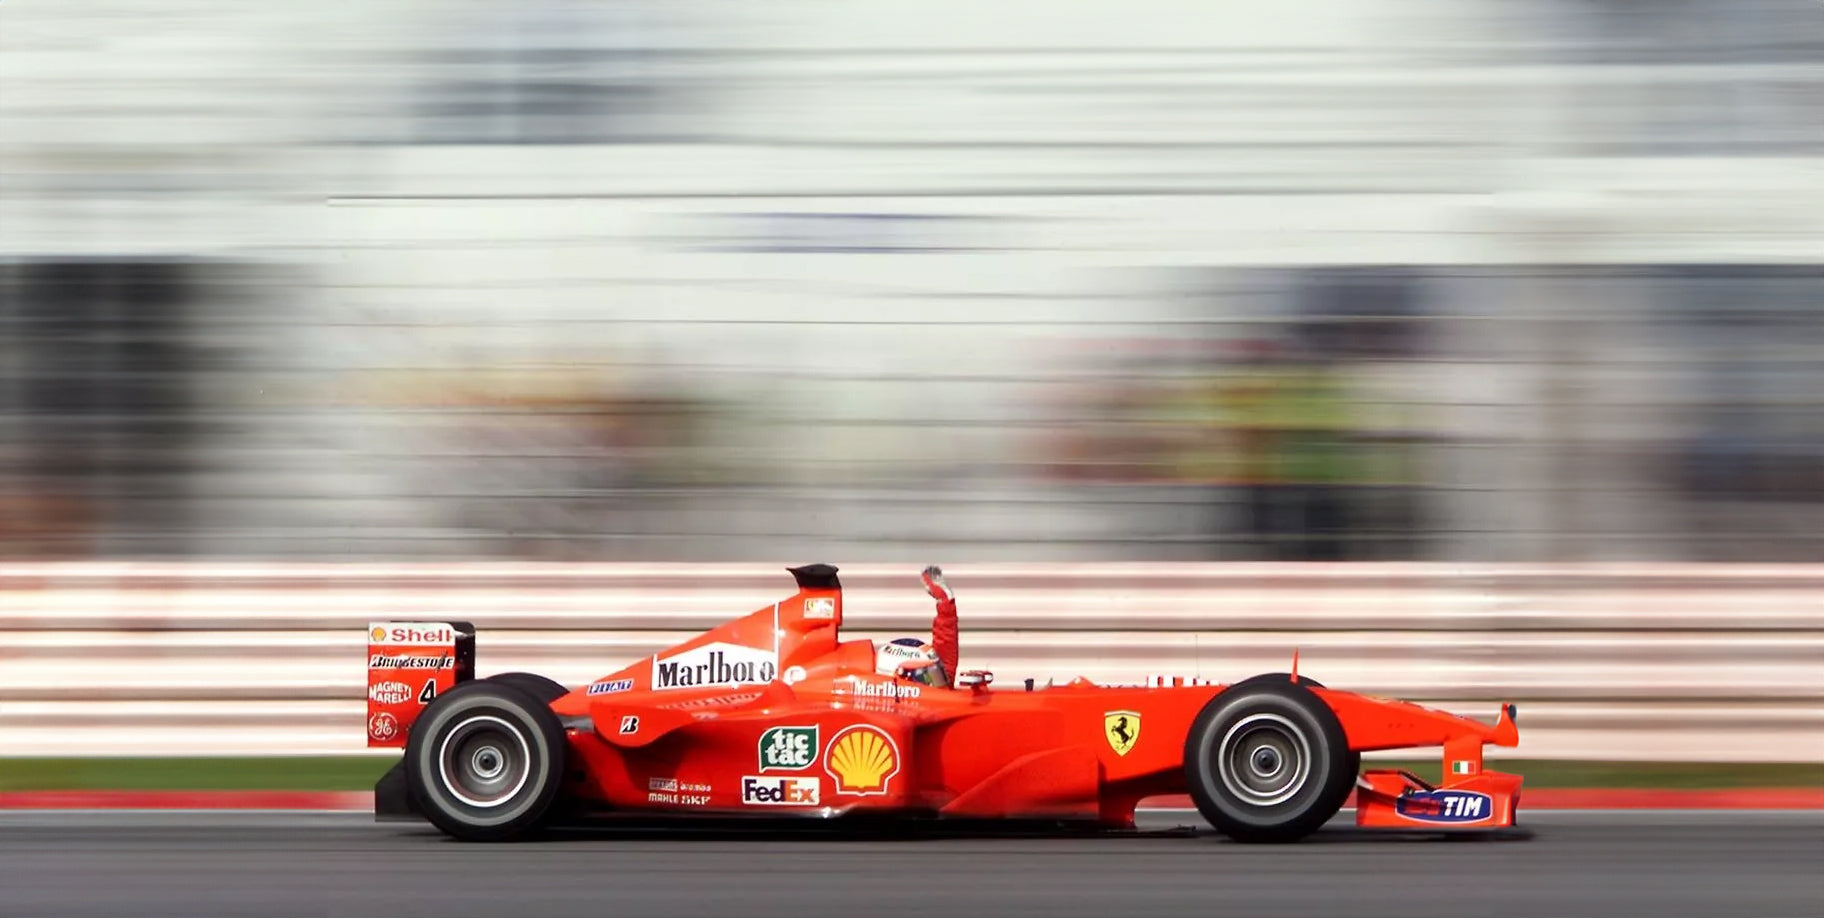 Rolling shot of Michael Schumacher racing for Ferrari in Marlboro livery